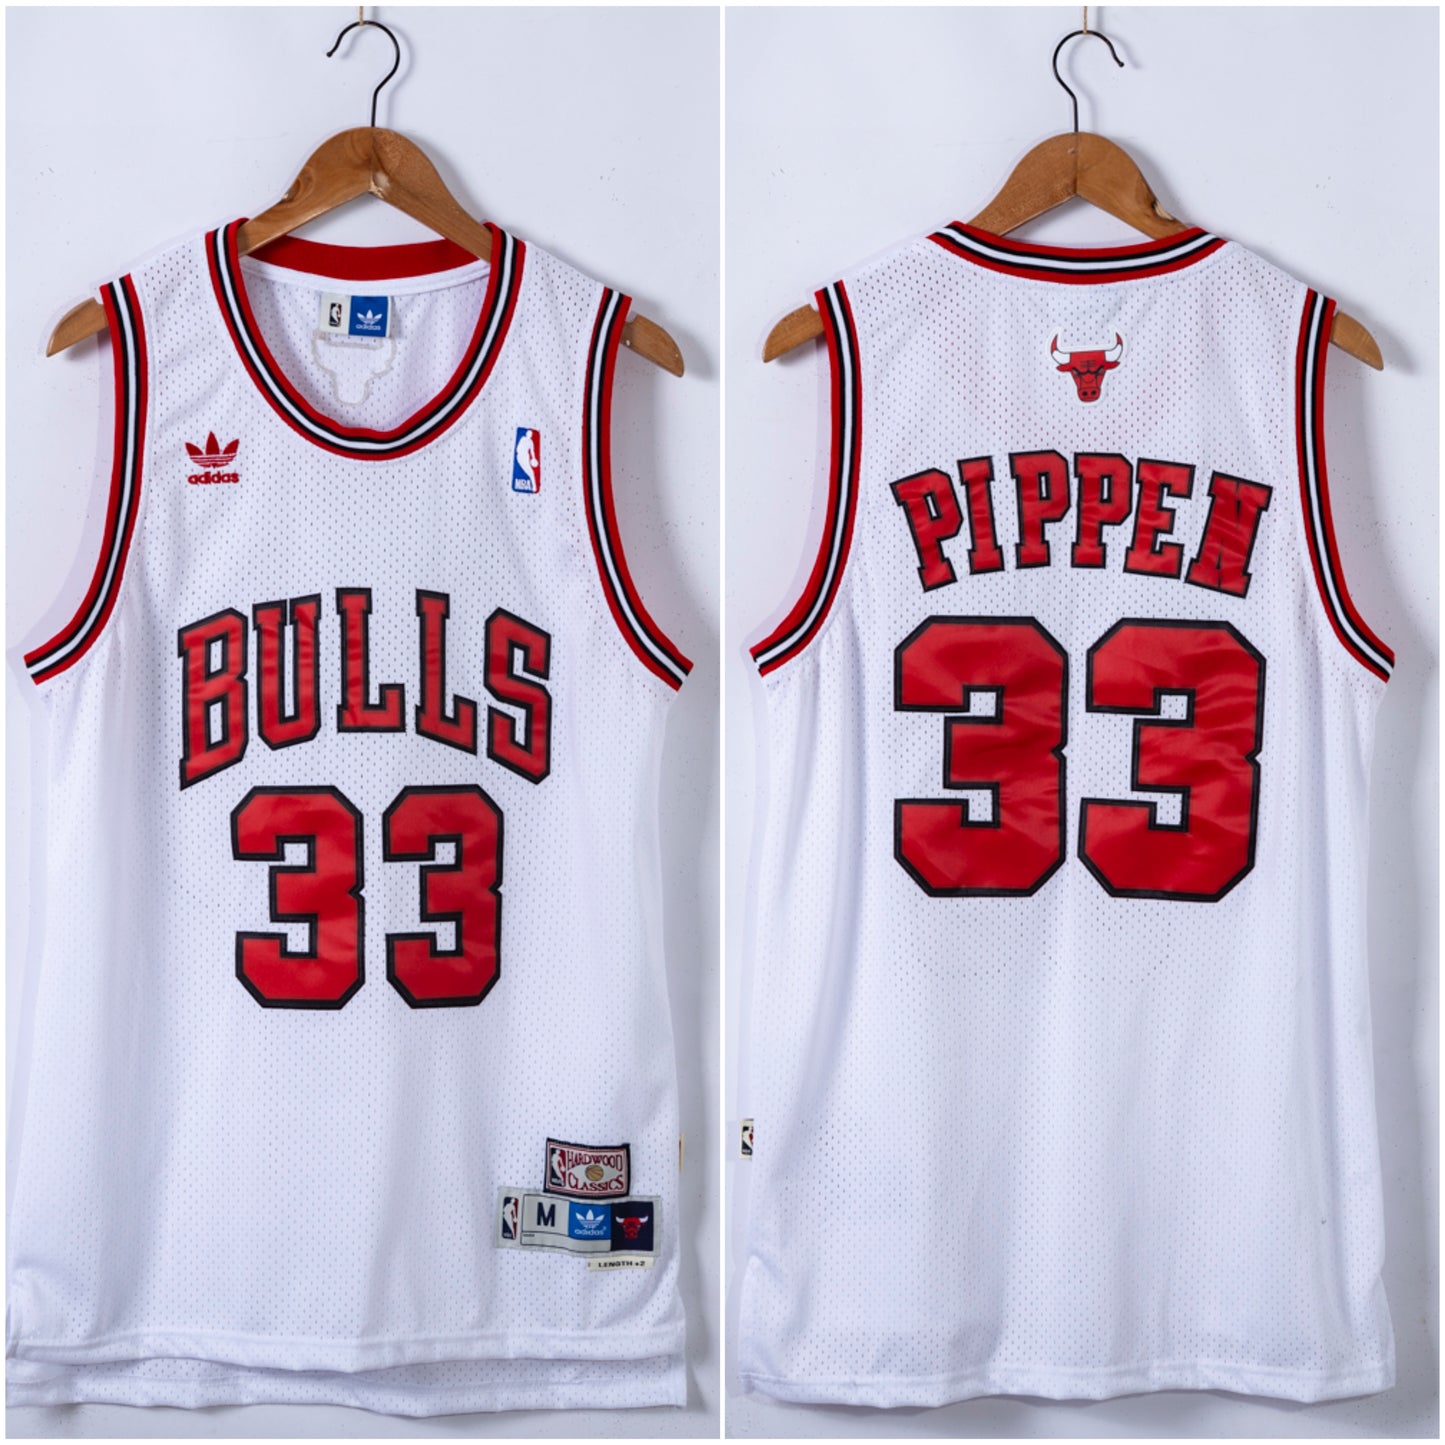 PIPPEN 33 White Chicago Bulls NBA Jersey